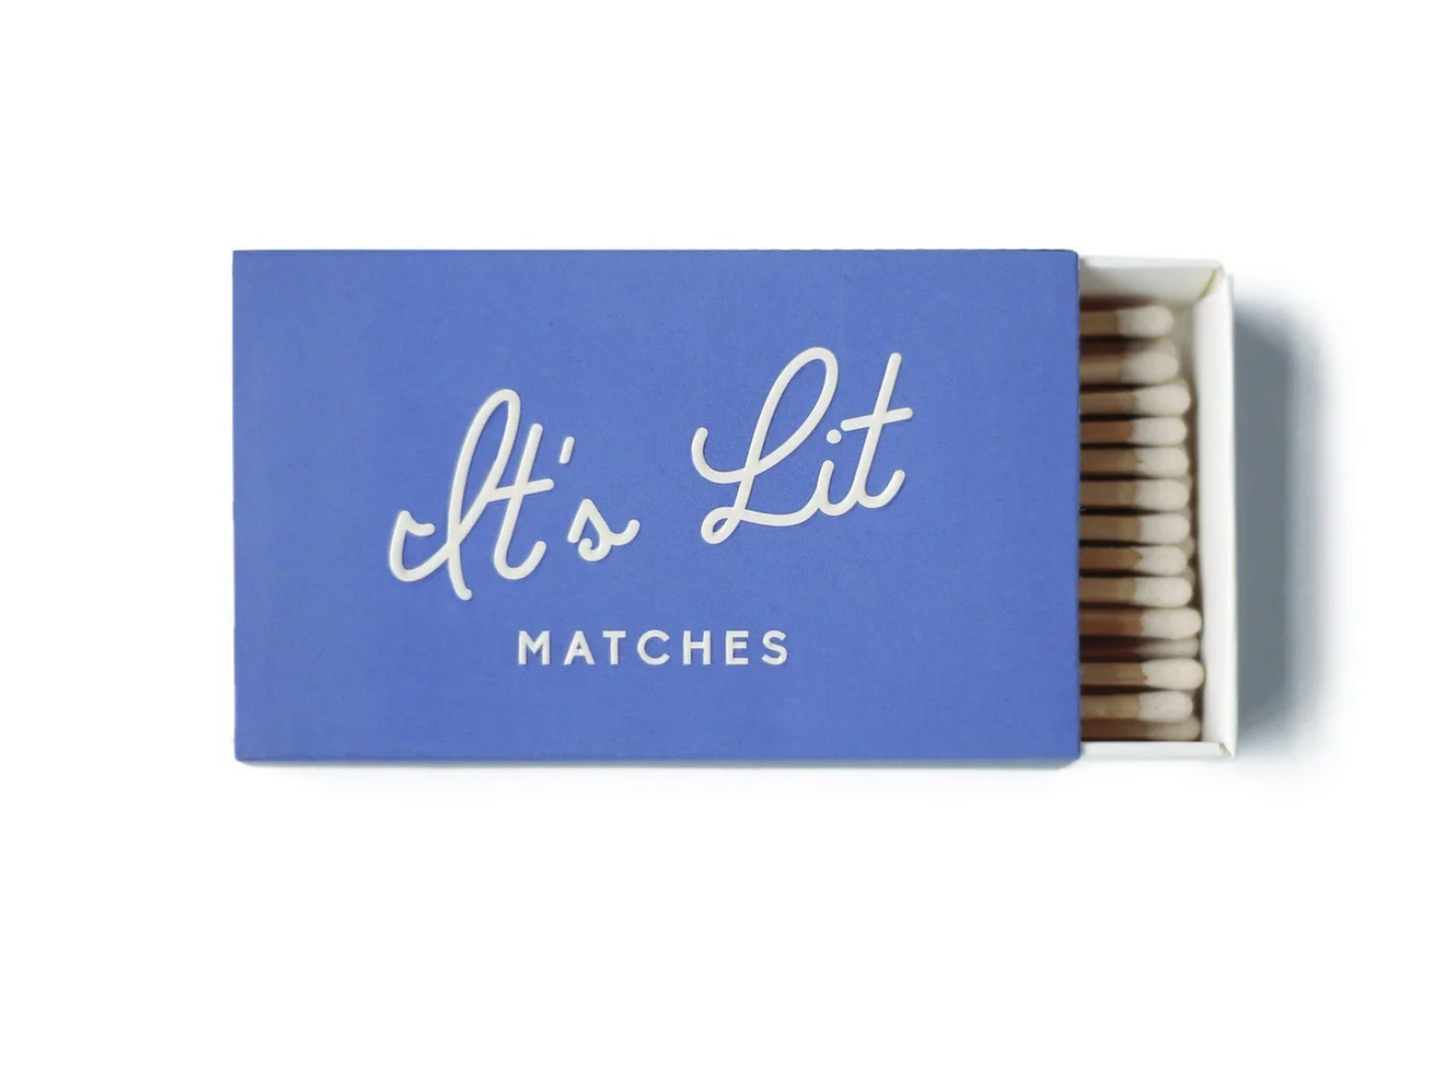 Matches - 'Its Lit"